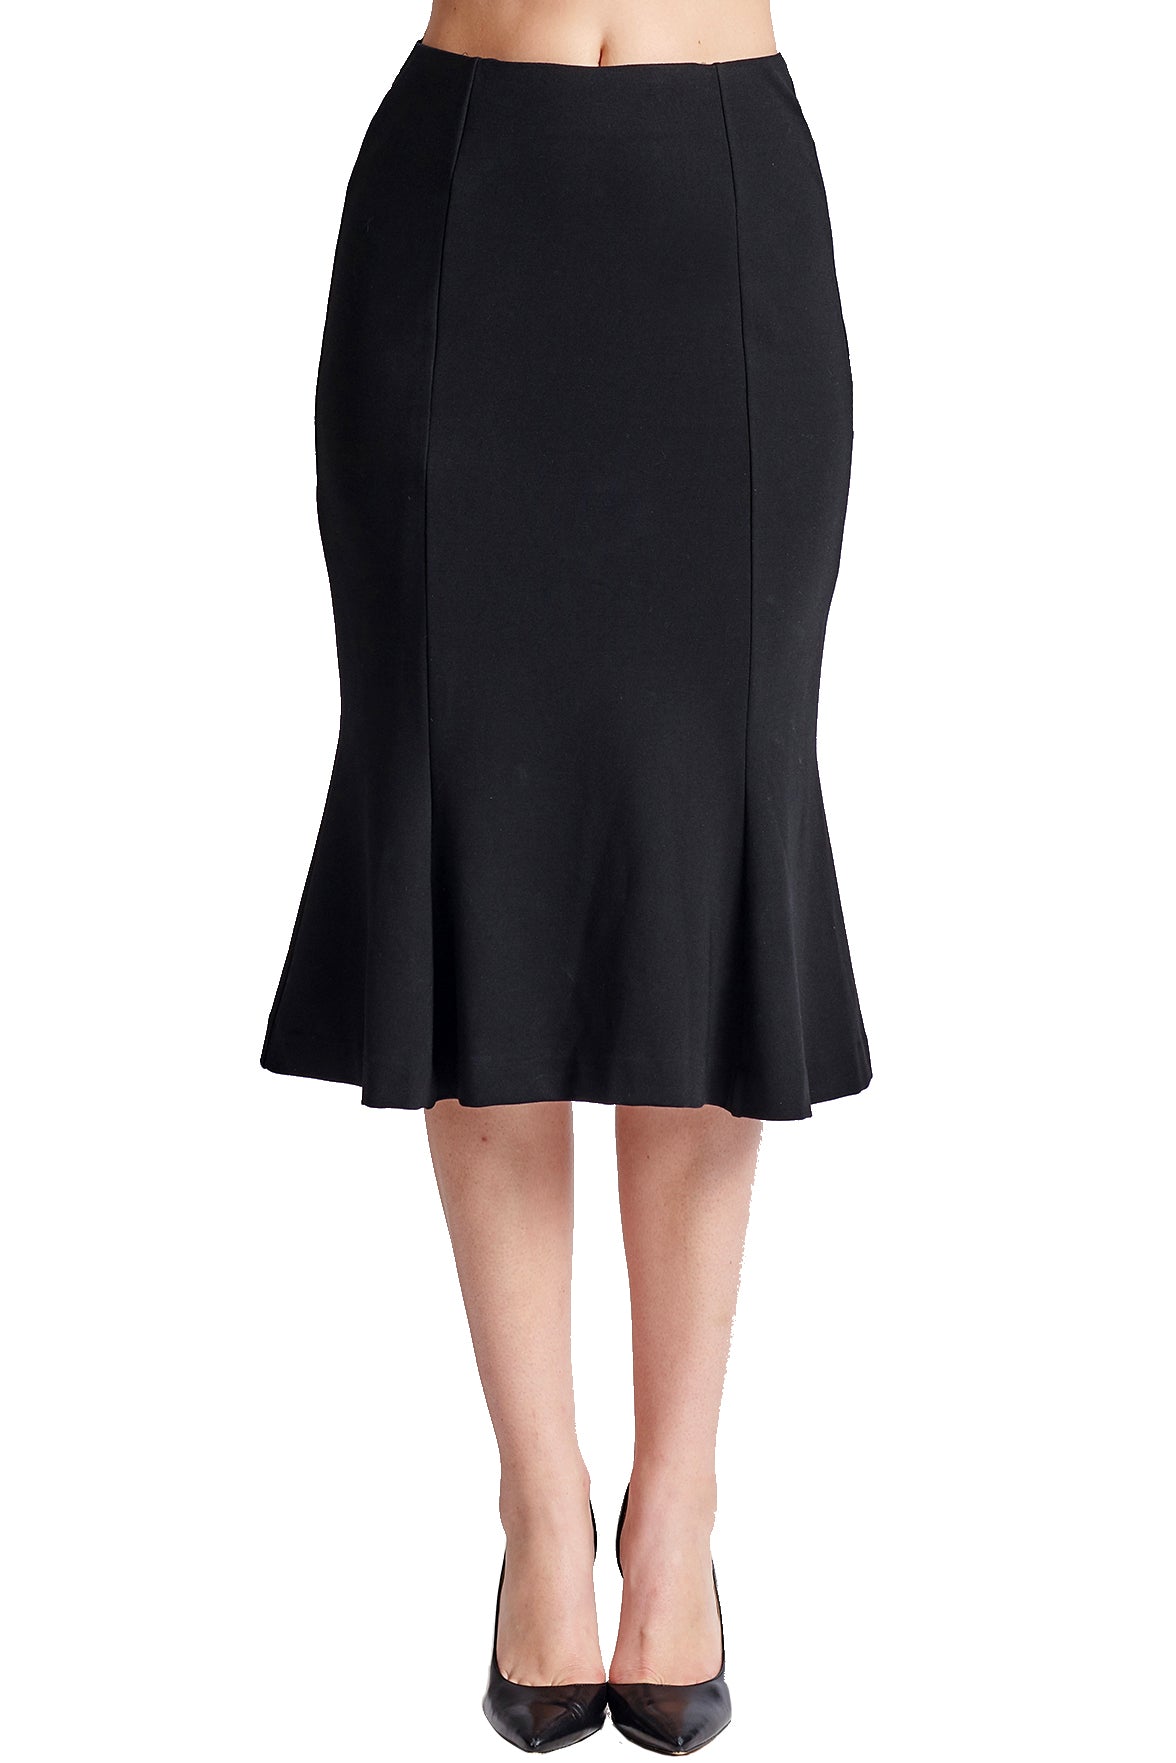 Front view of model wearing the Simona Maghen Sarit Skirt, black knit Ponte seamed midi mermaid skirt.